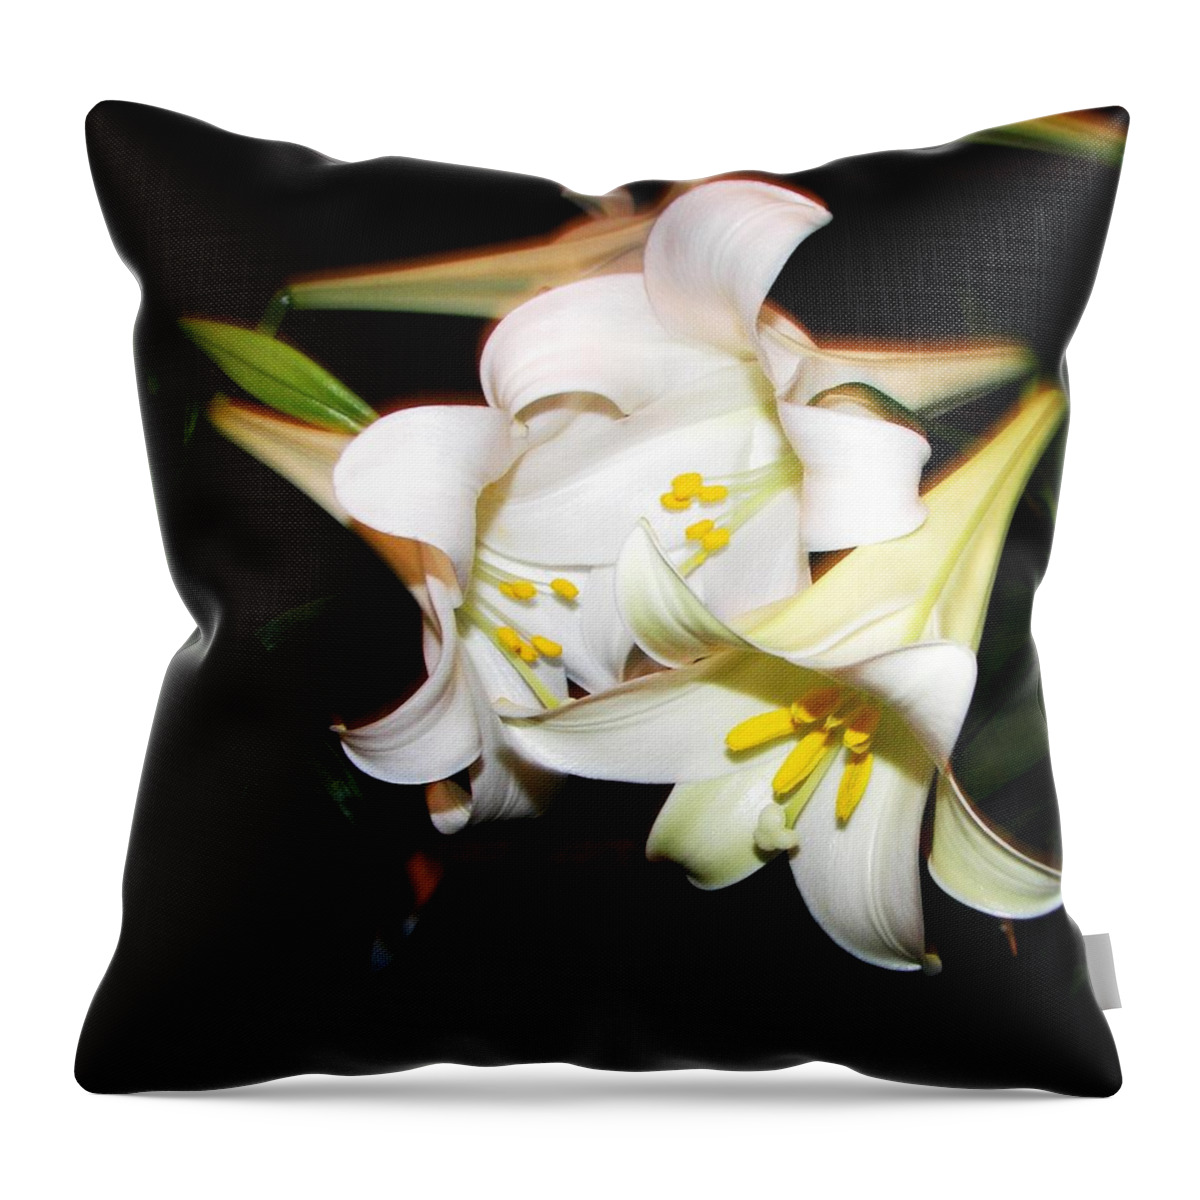 Flower Throw Pillow featuring the photograph Easter Lilies by Pamela Hyde Wilson